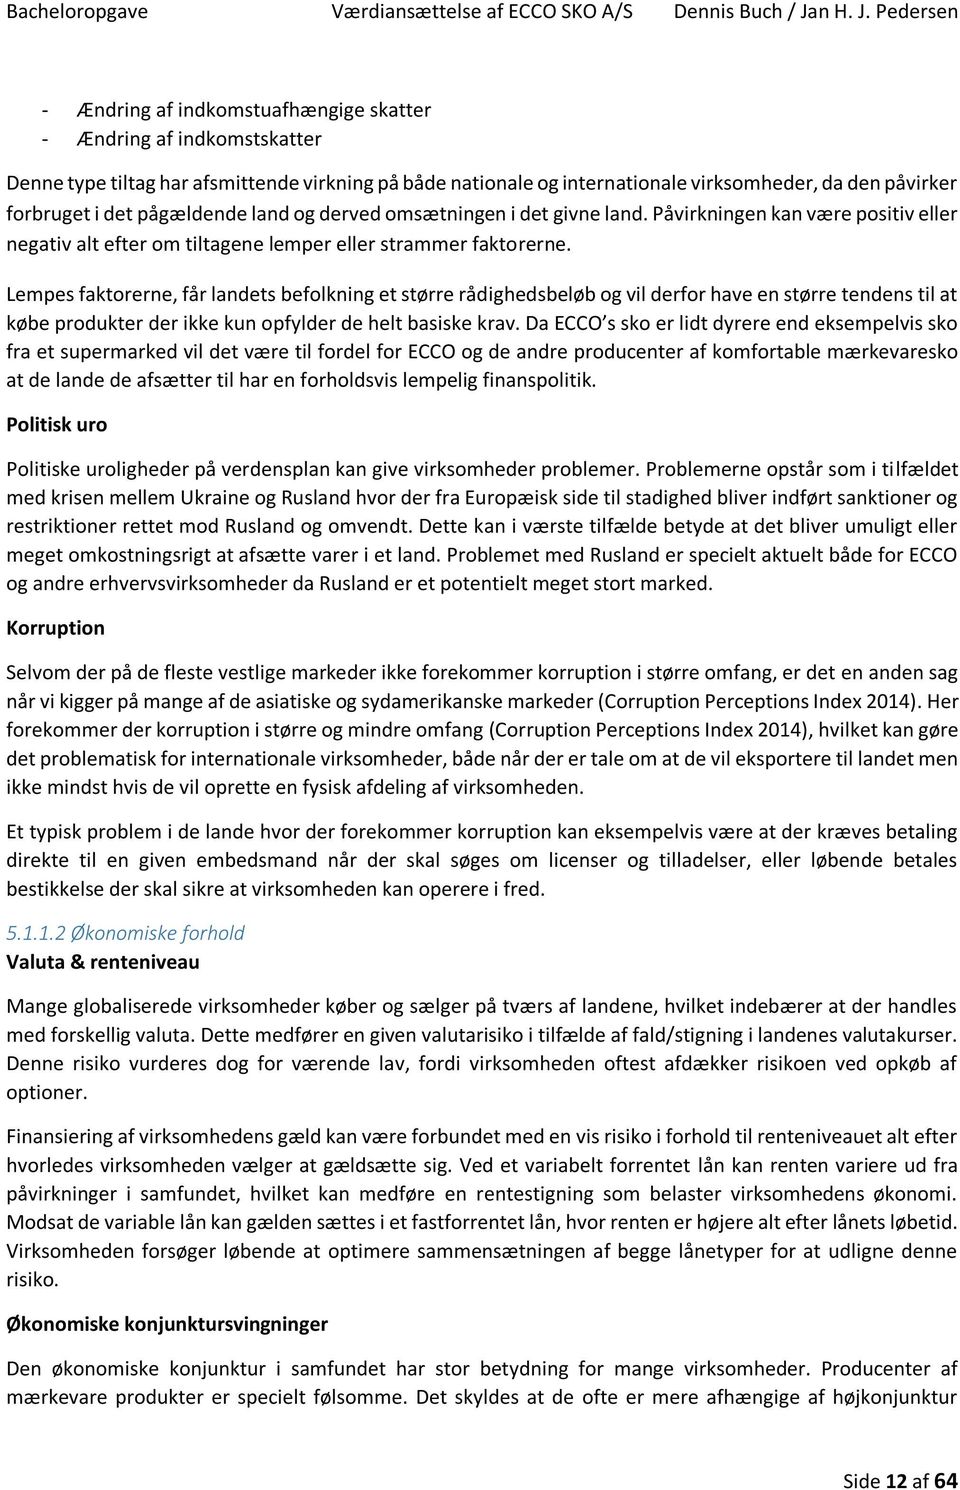 A valuation of the Danish company ECCO SKO - PDF Gratis download